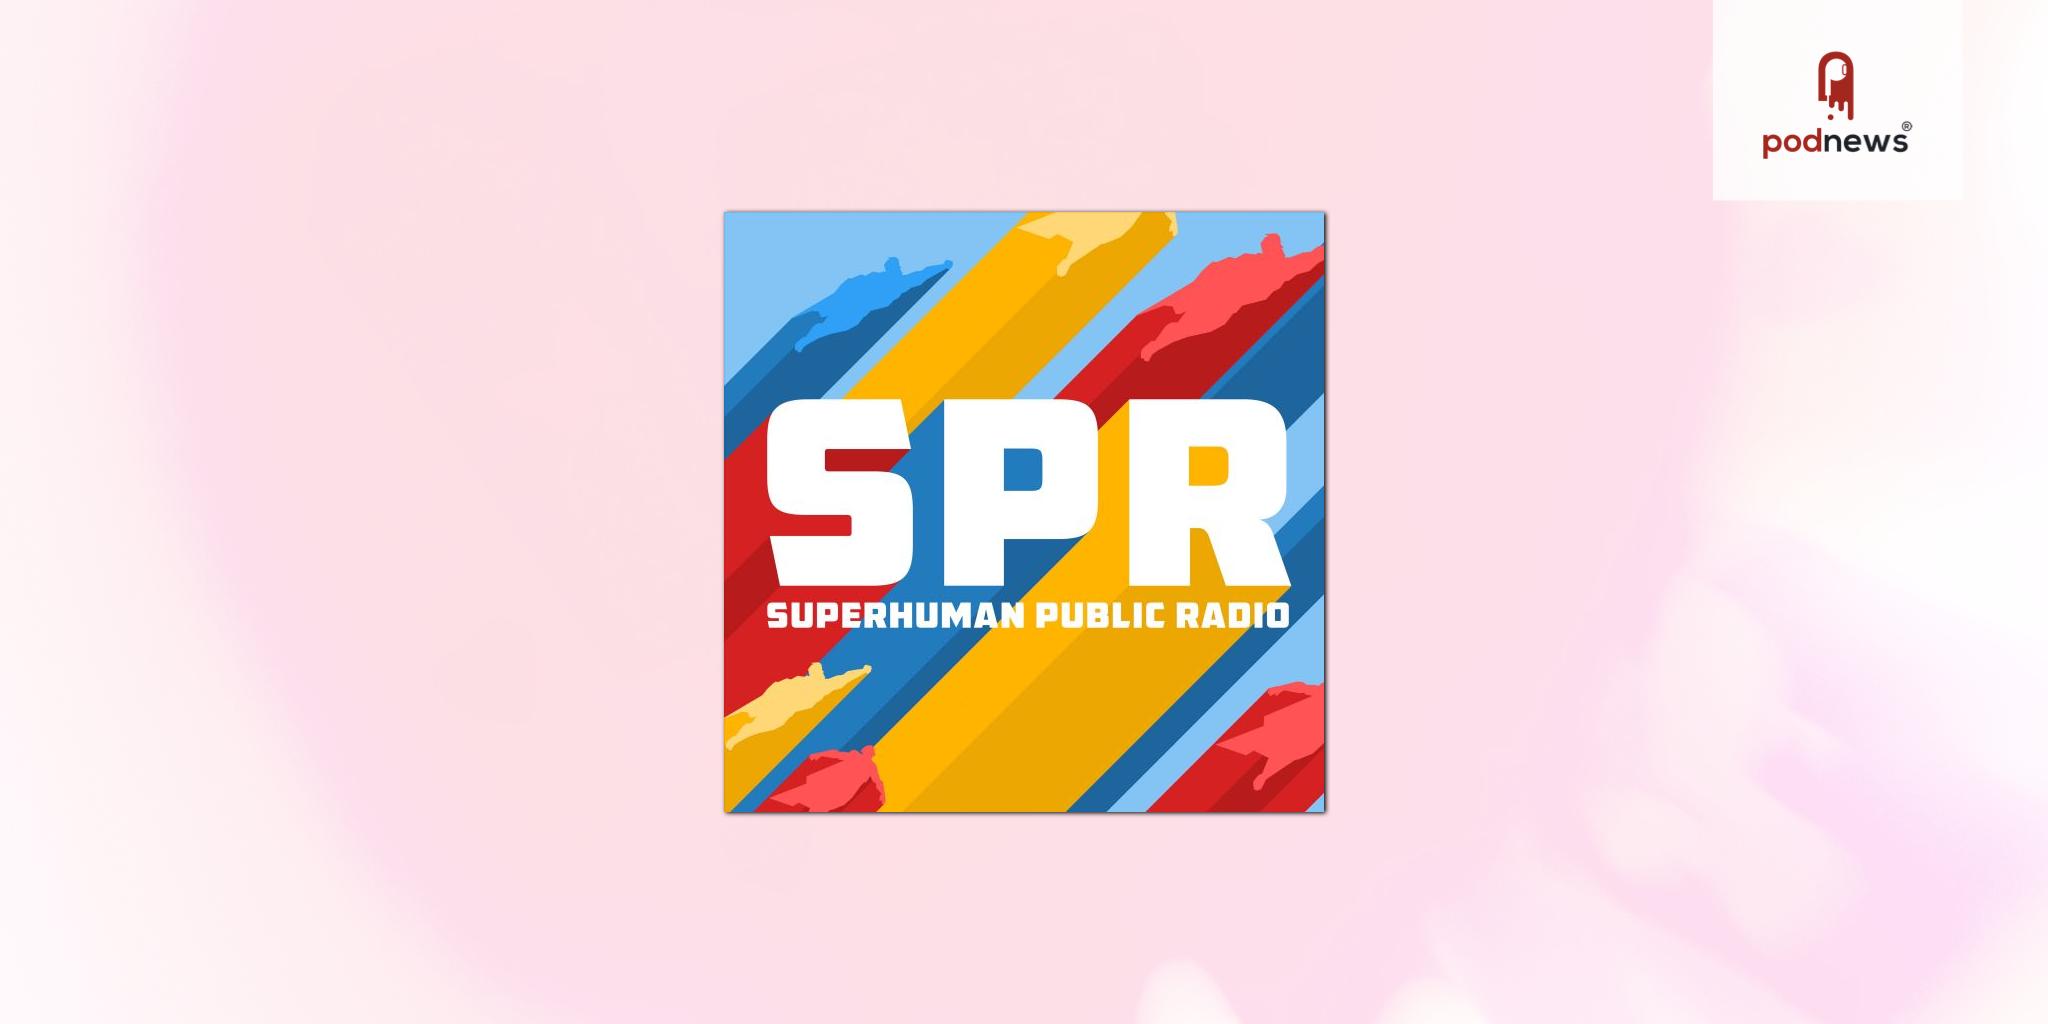 Superhuman Public Radio returns for season two